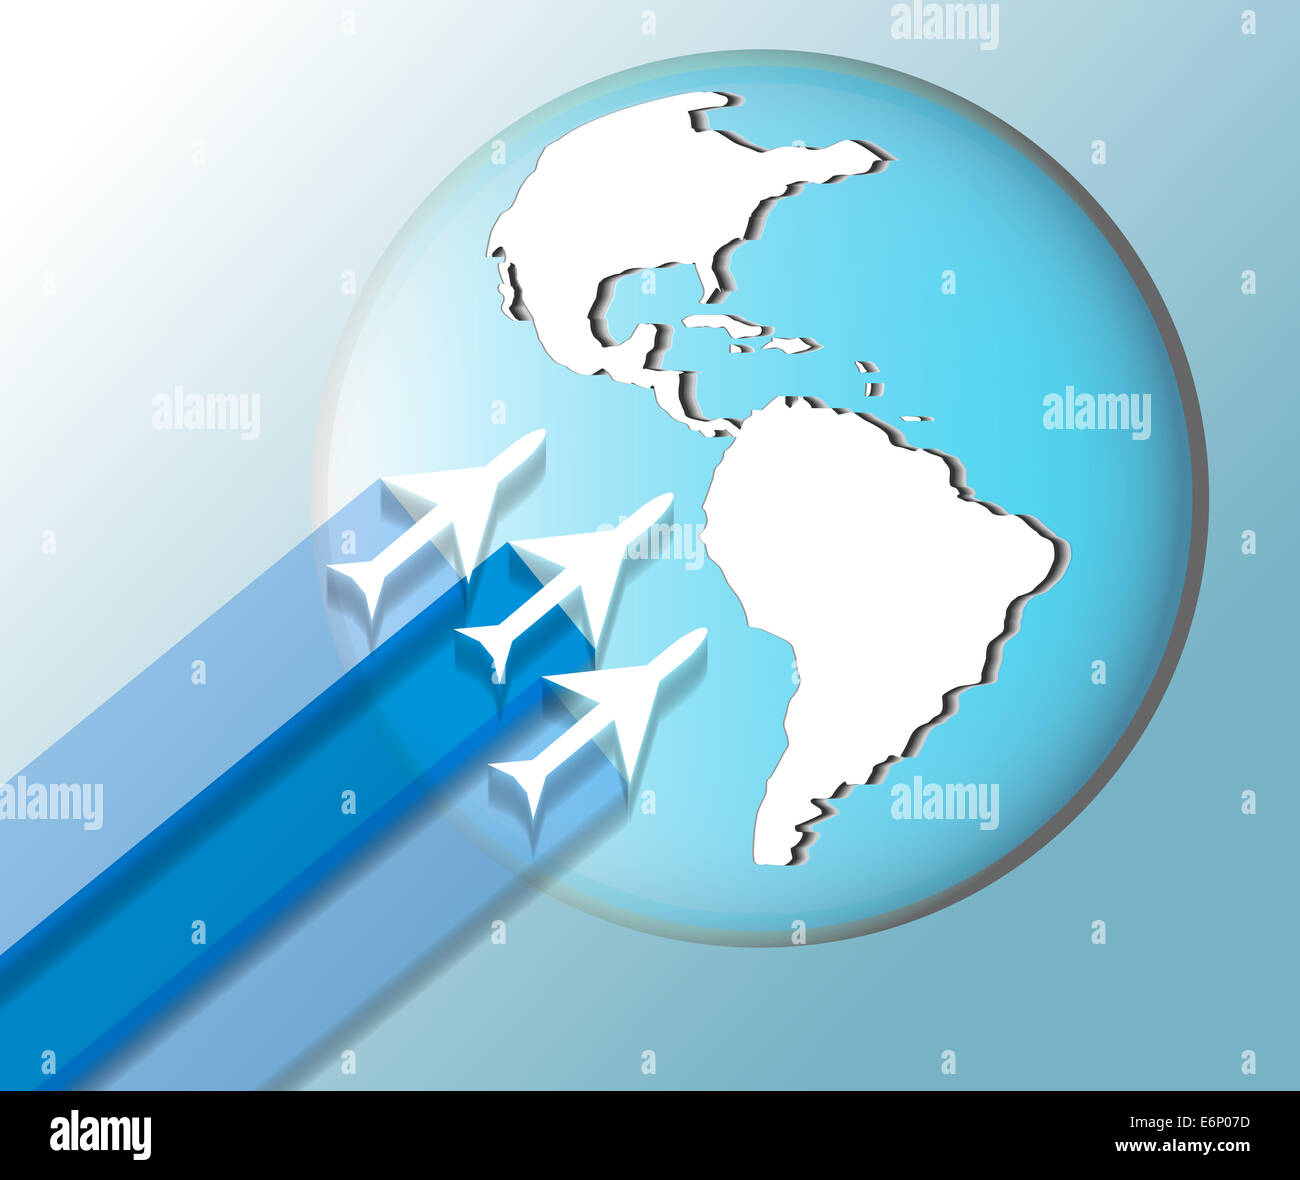 Illustration of planes on world globe Stock Photo